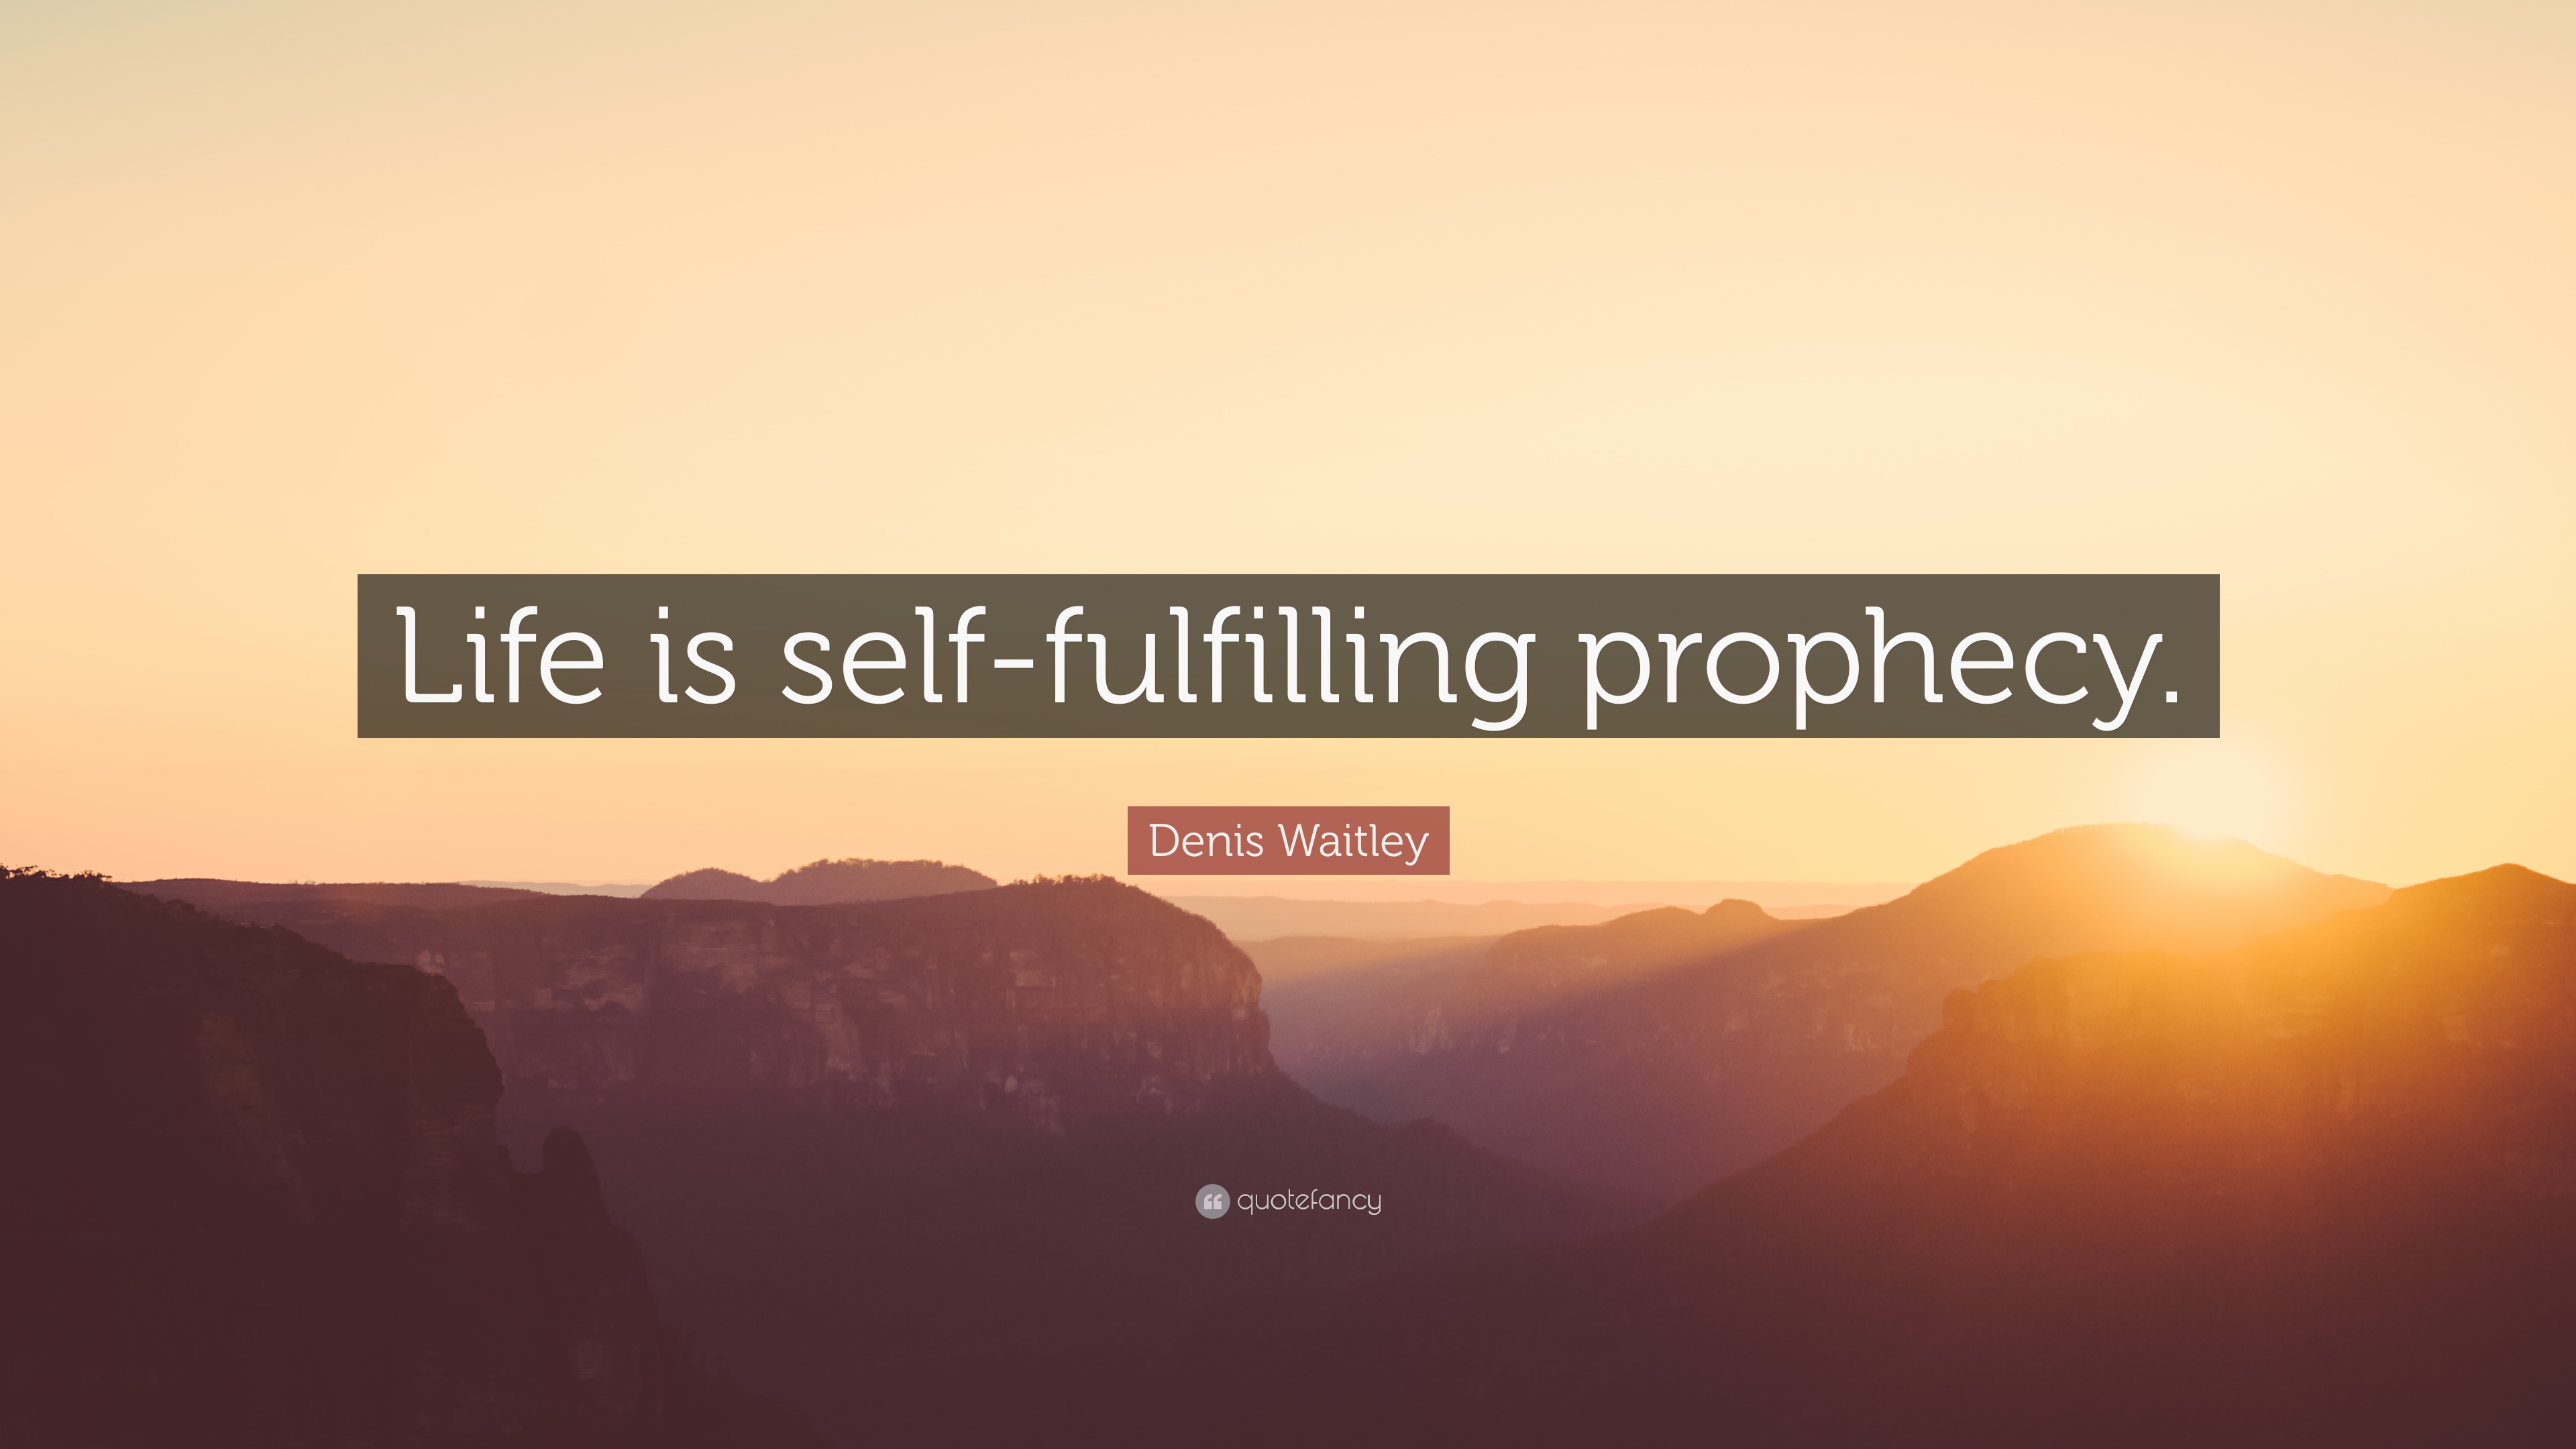 Kies jouw selffulfilling prophecy zorgvuldig!